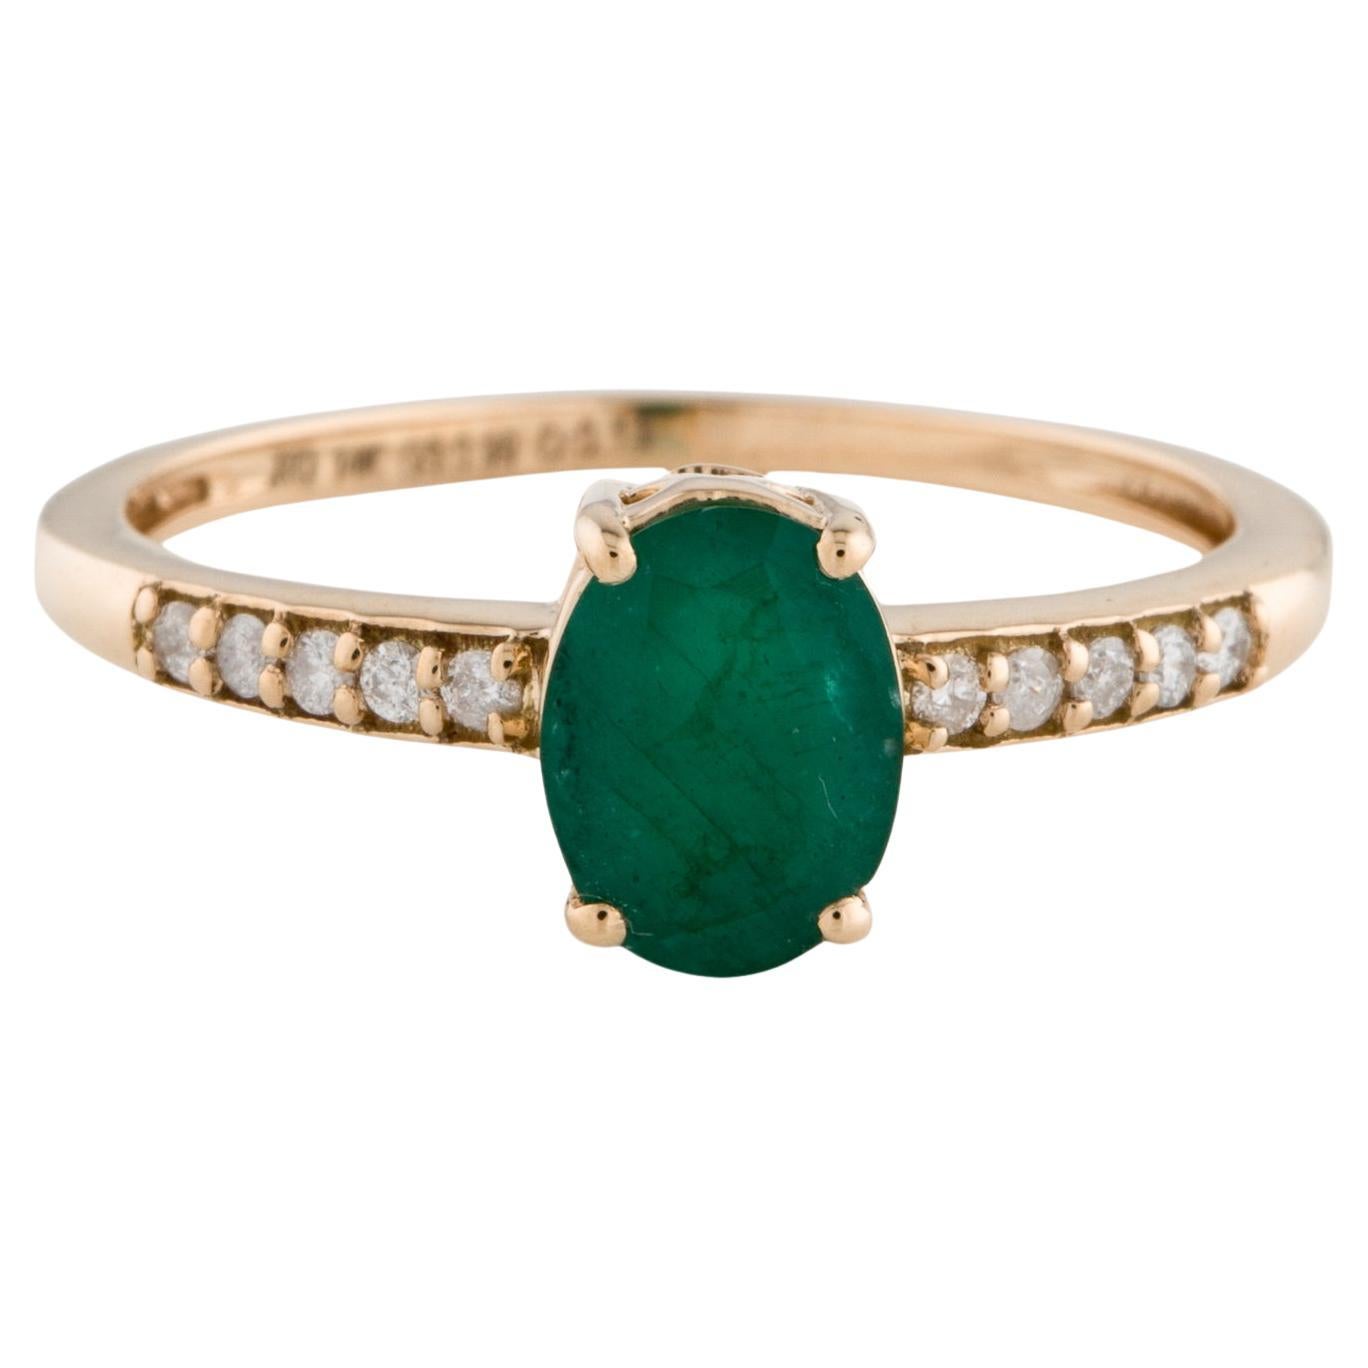 Captivating 14K Gold 1.12ctw Emerald & Diamond Ring - Size 8.75 - Fine Luxury